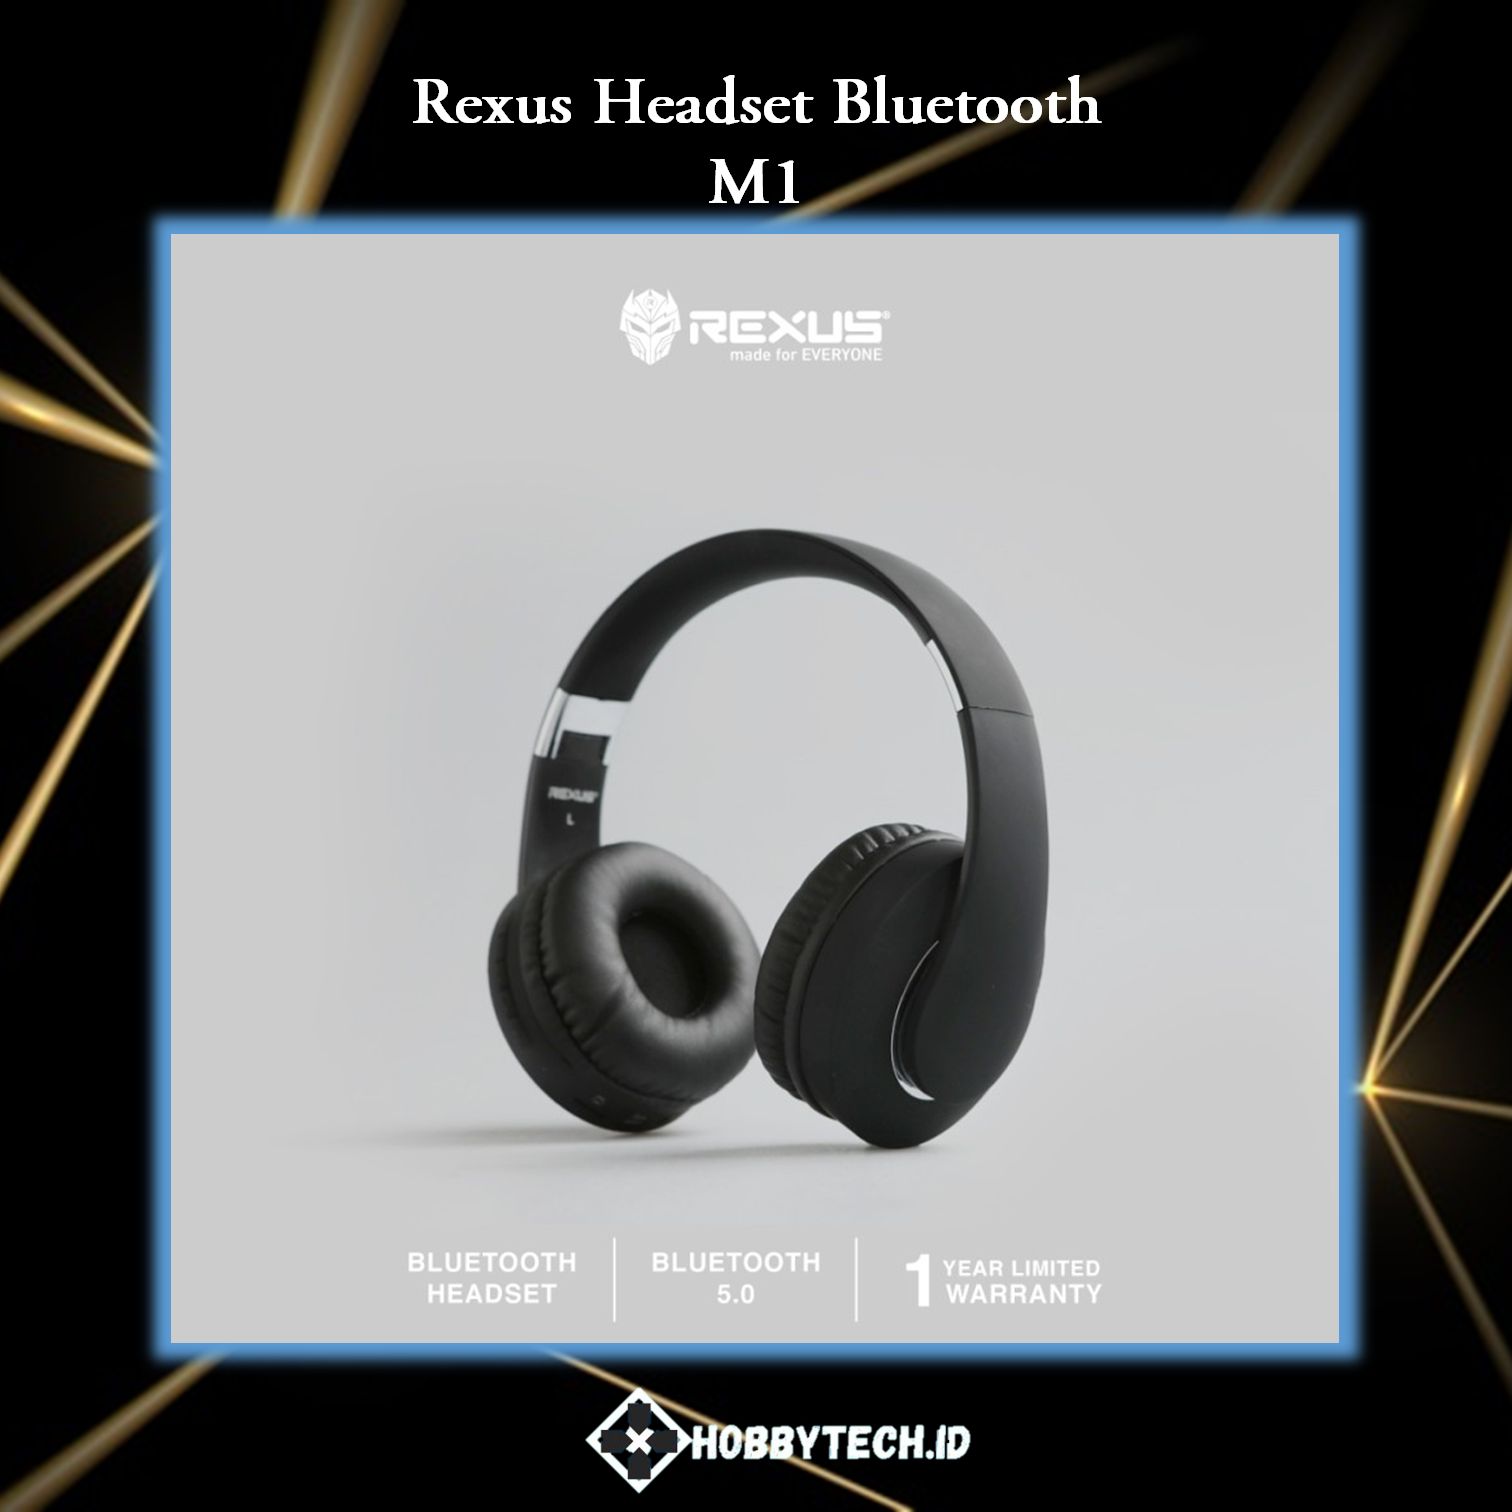 Rexus Headset Bluetooth M1